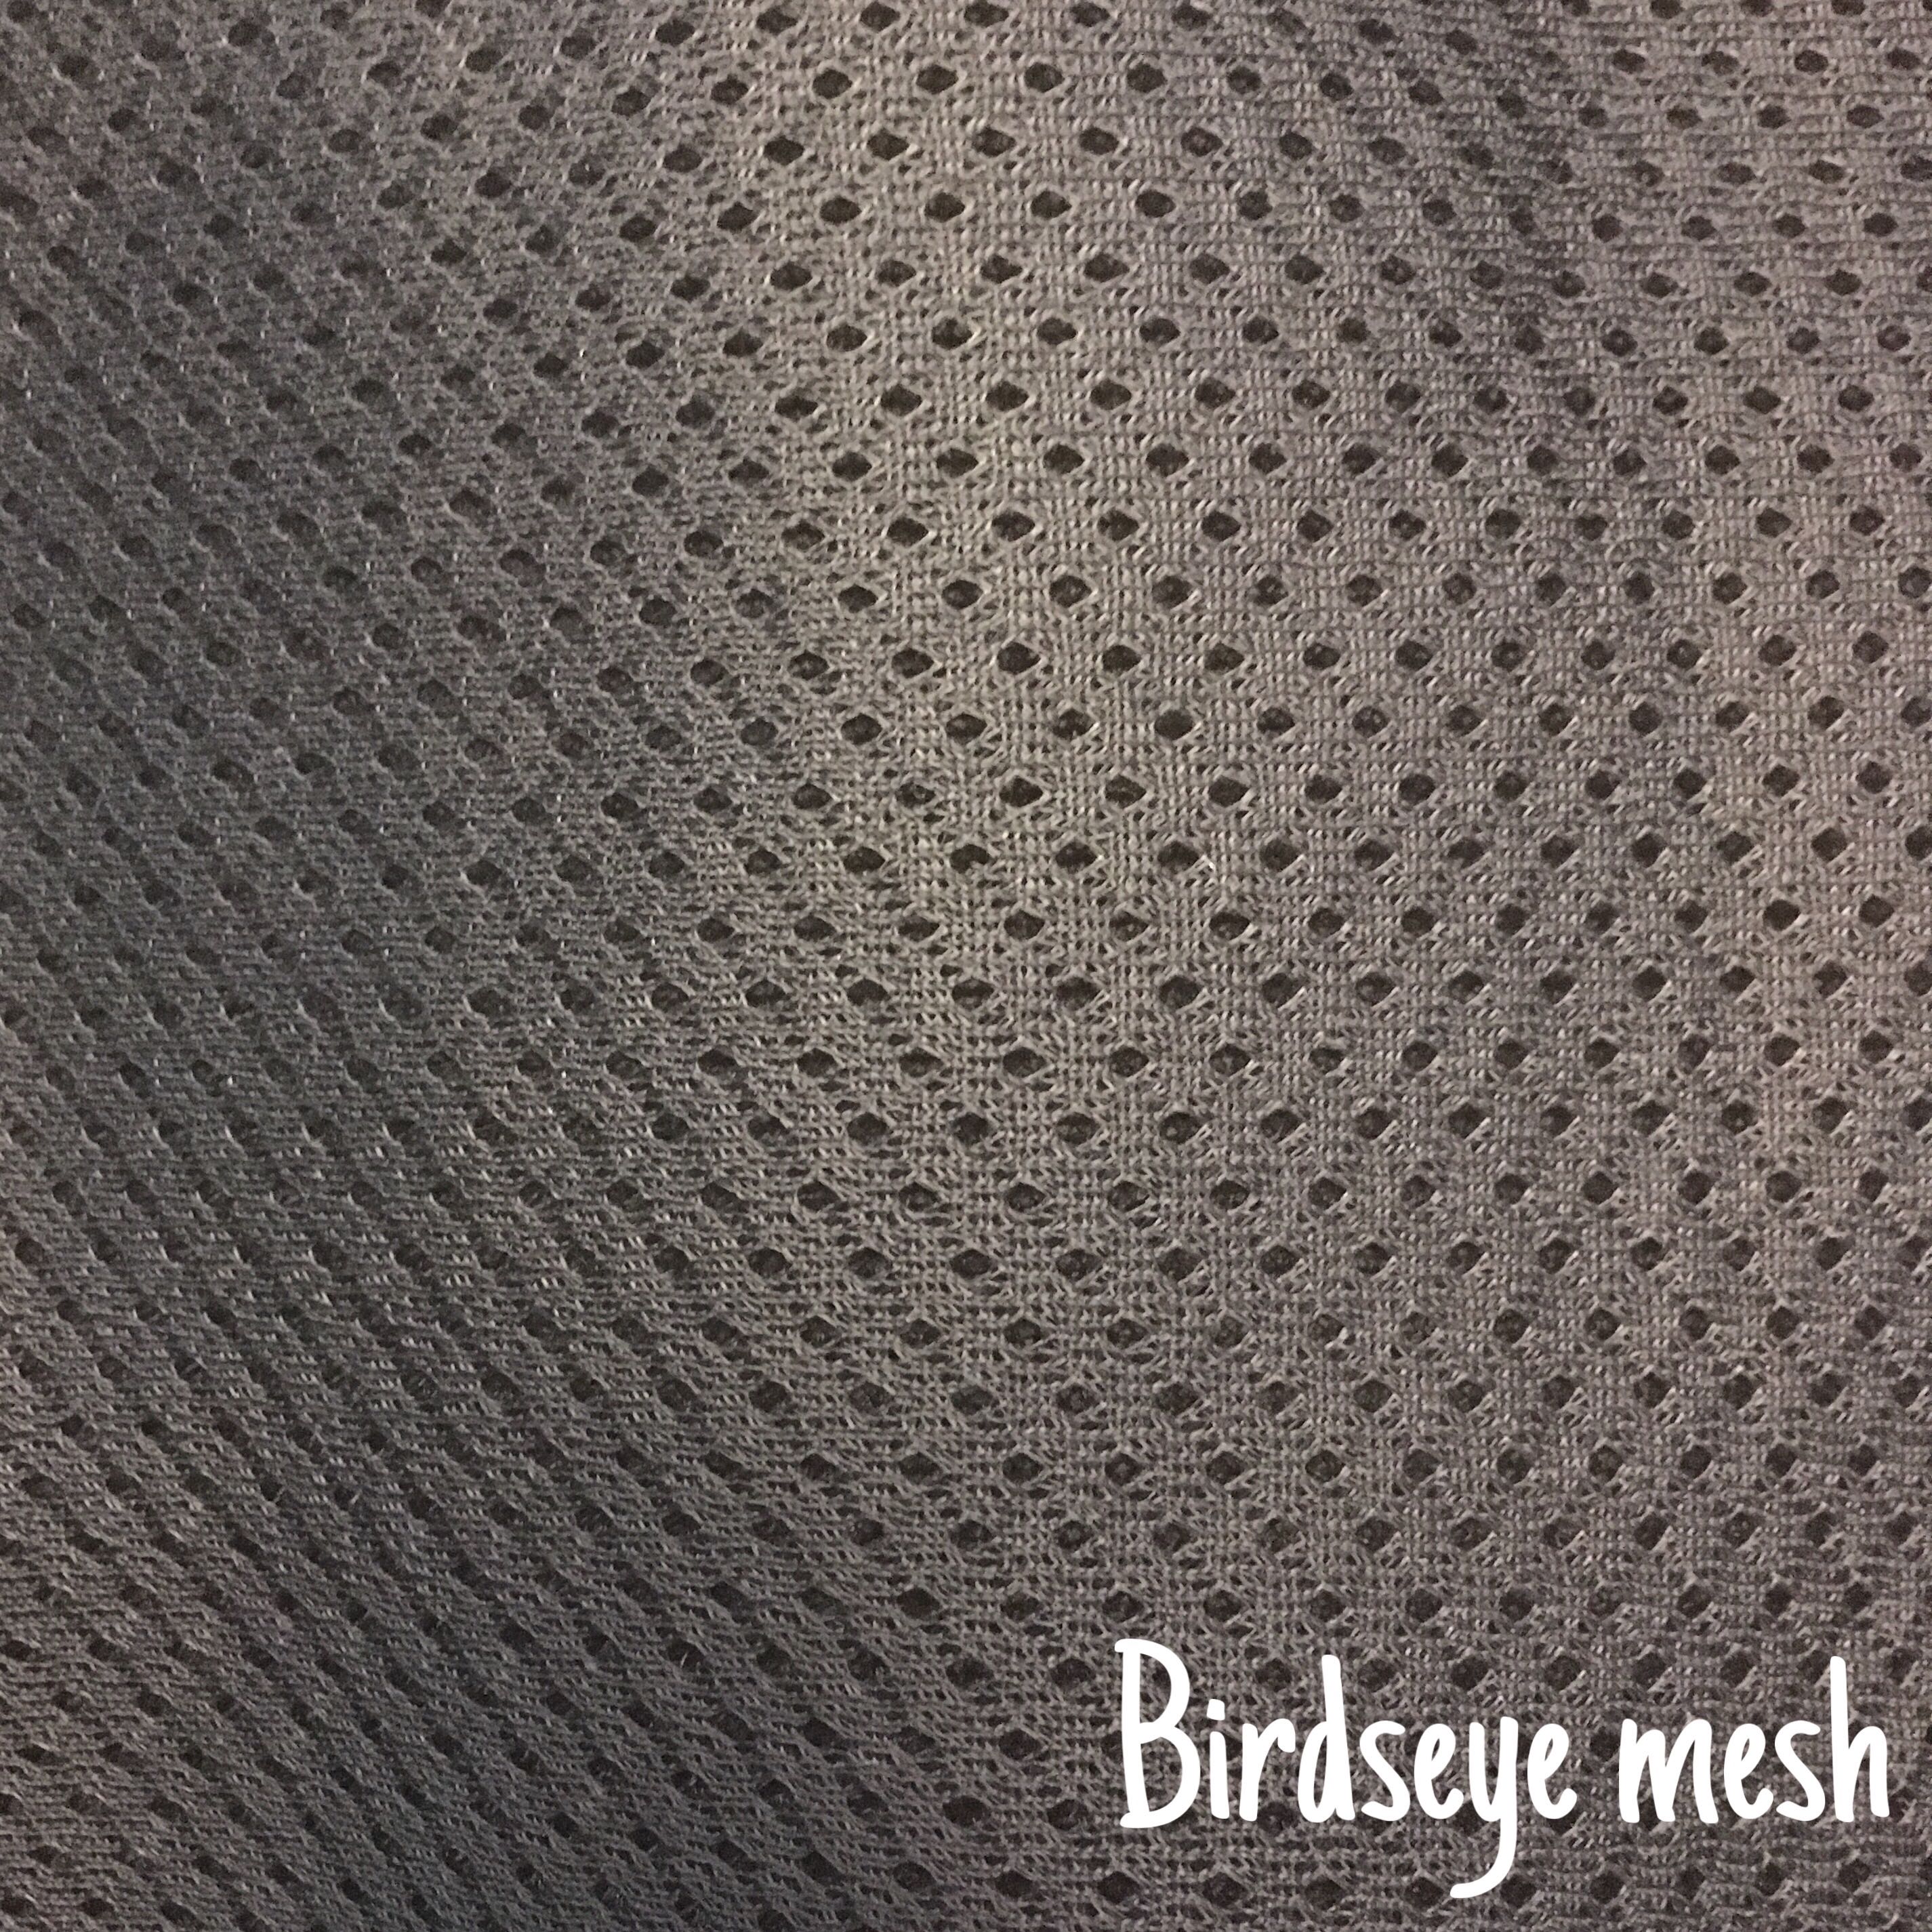 Birdseye_mesh.jpg